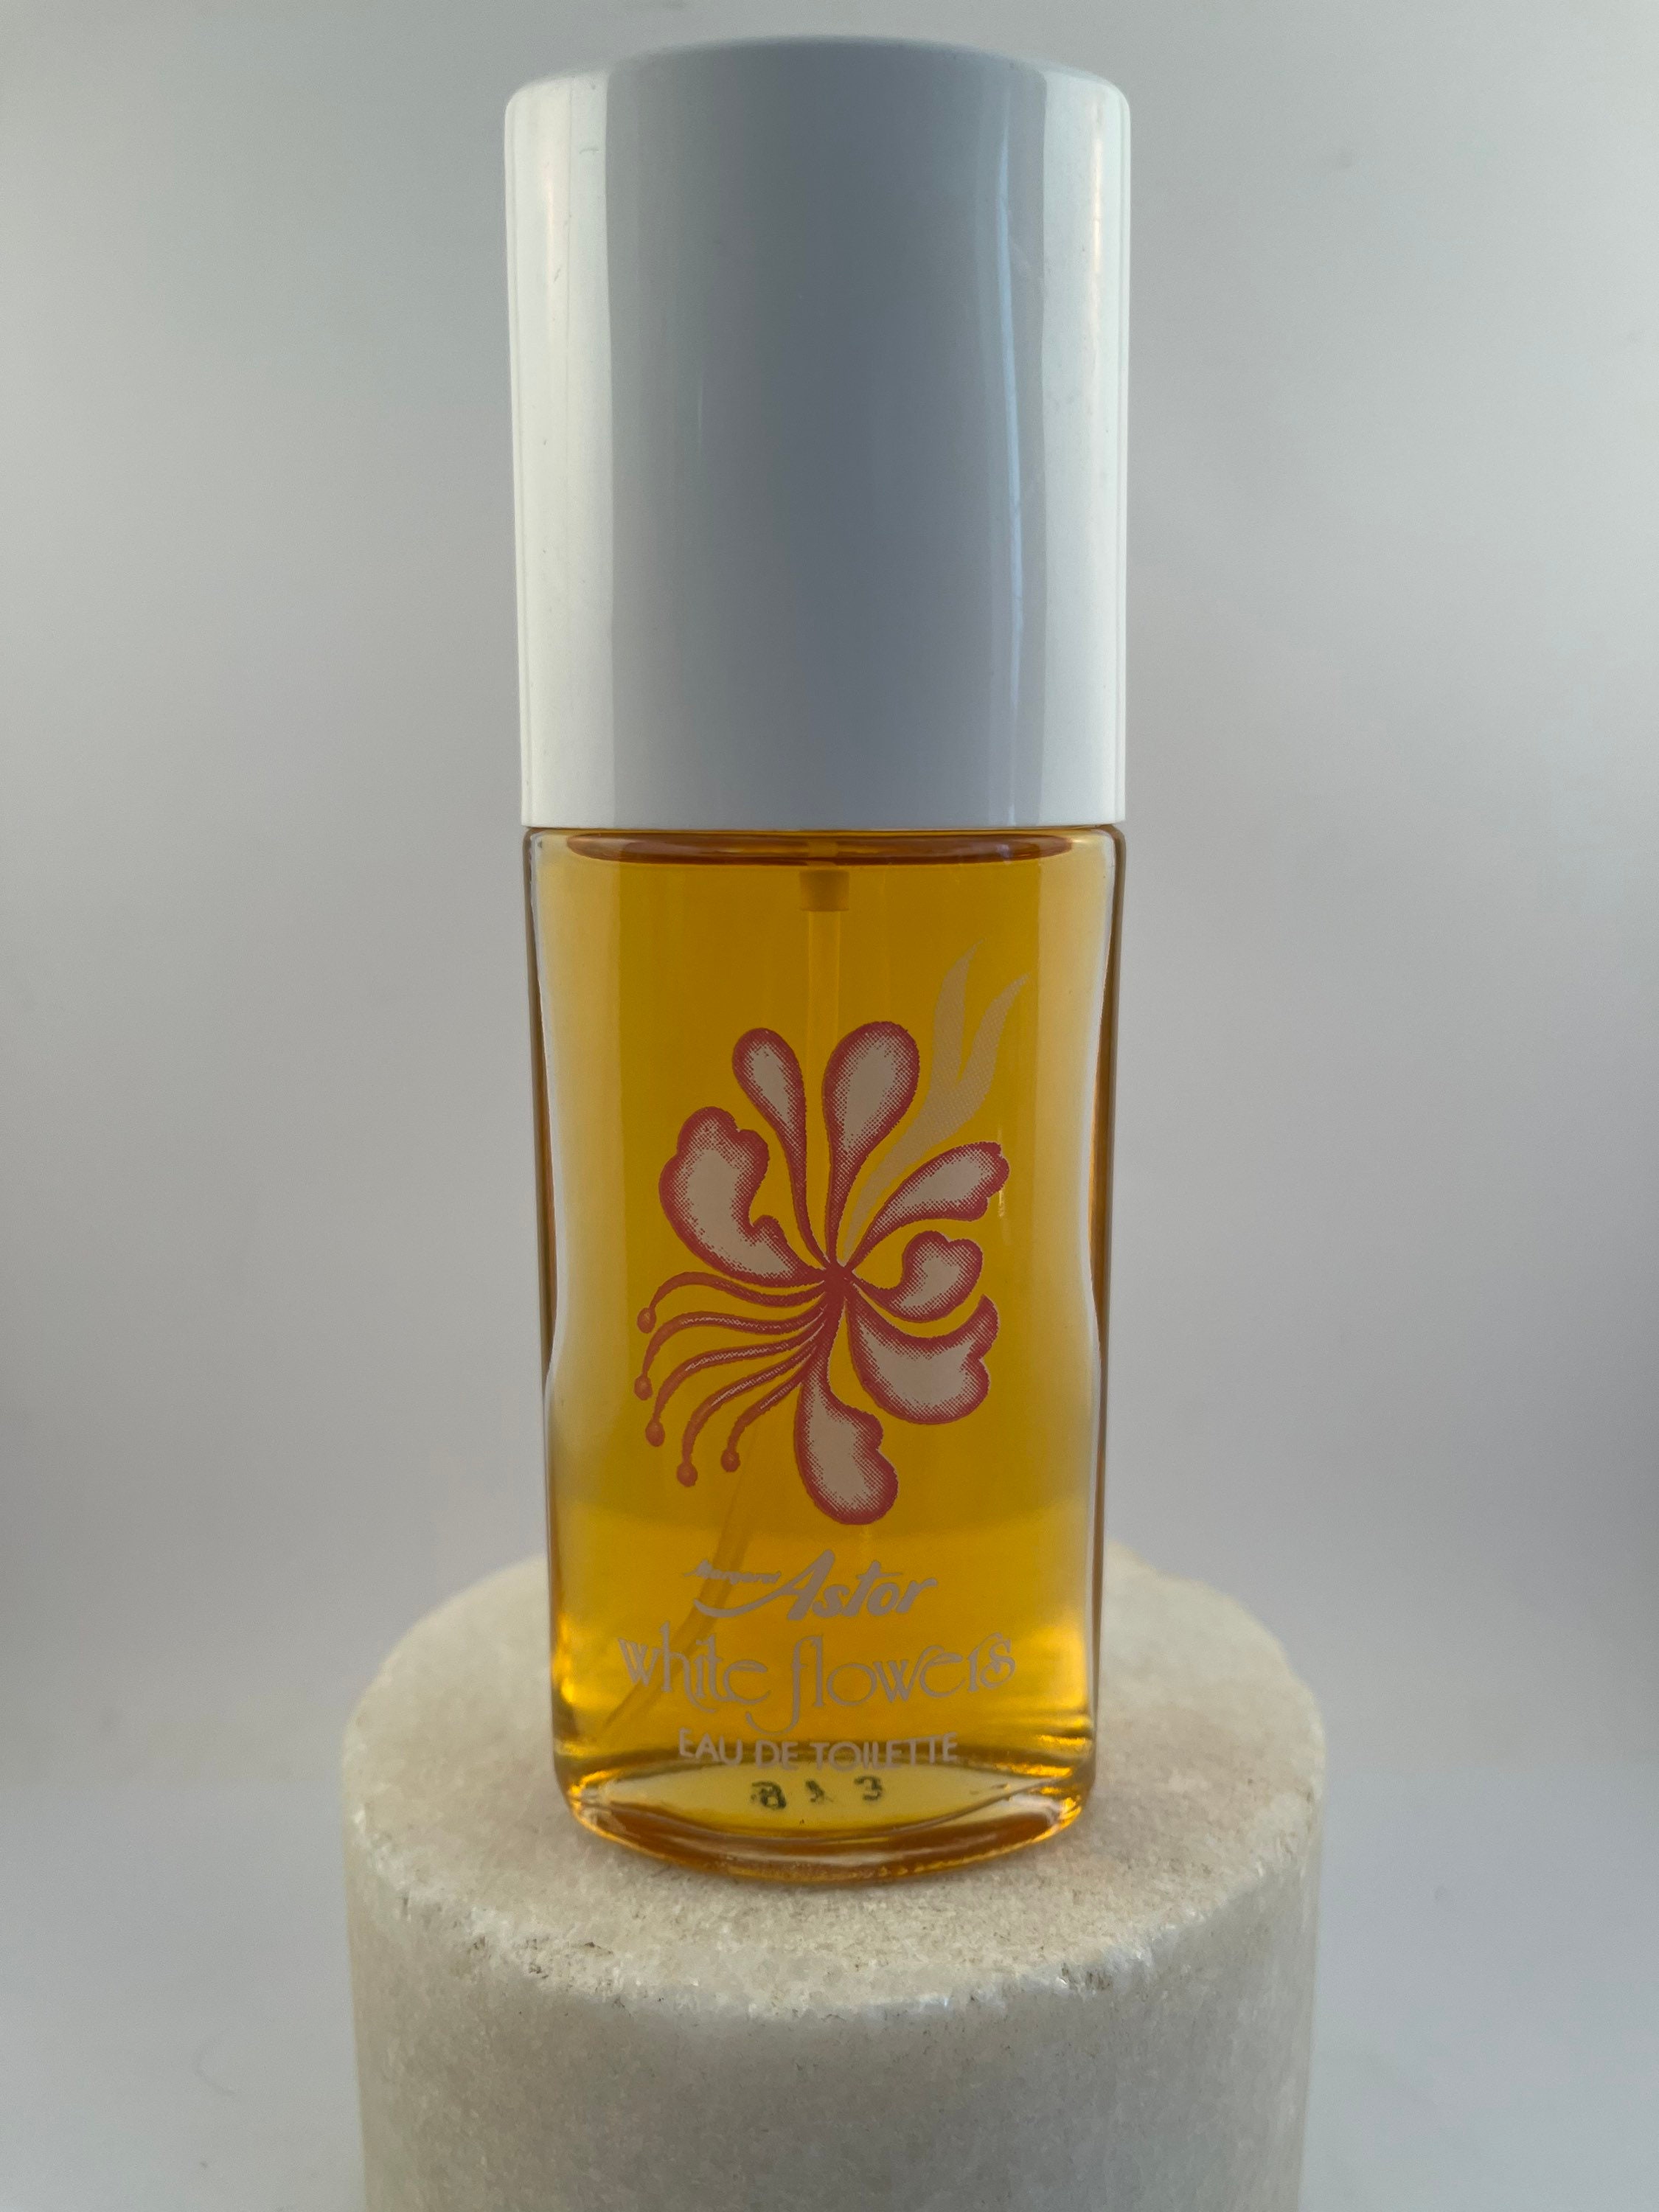 MOLECULE AMBROXAN 02 fragrance by ScentLab Parfums Premium Glass 100ml